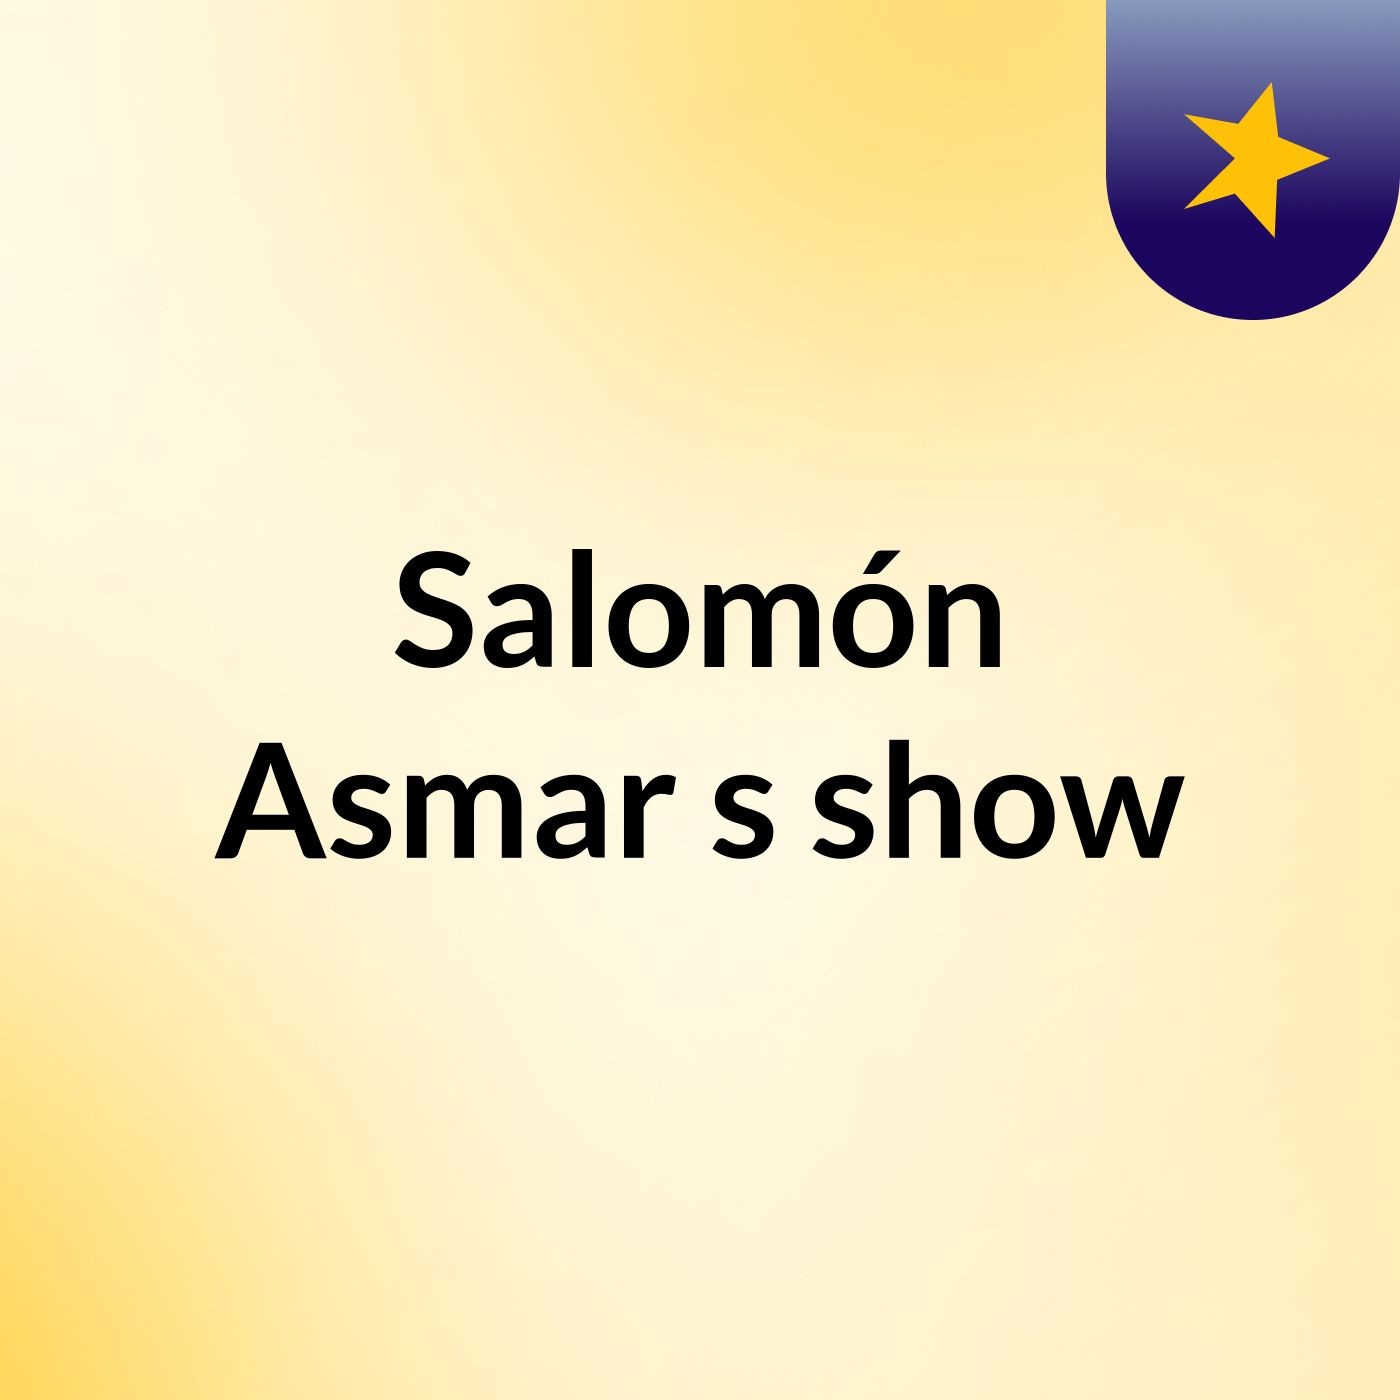 Salomón Asmar's show